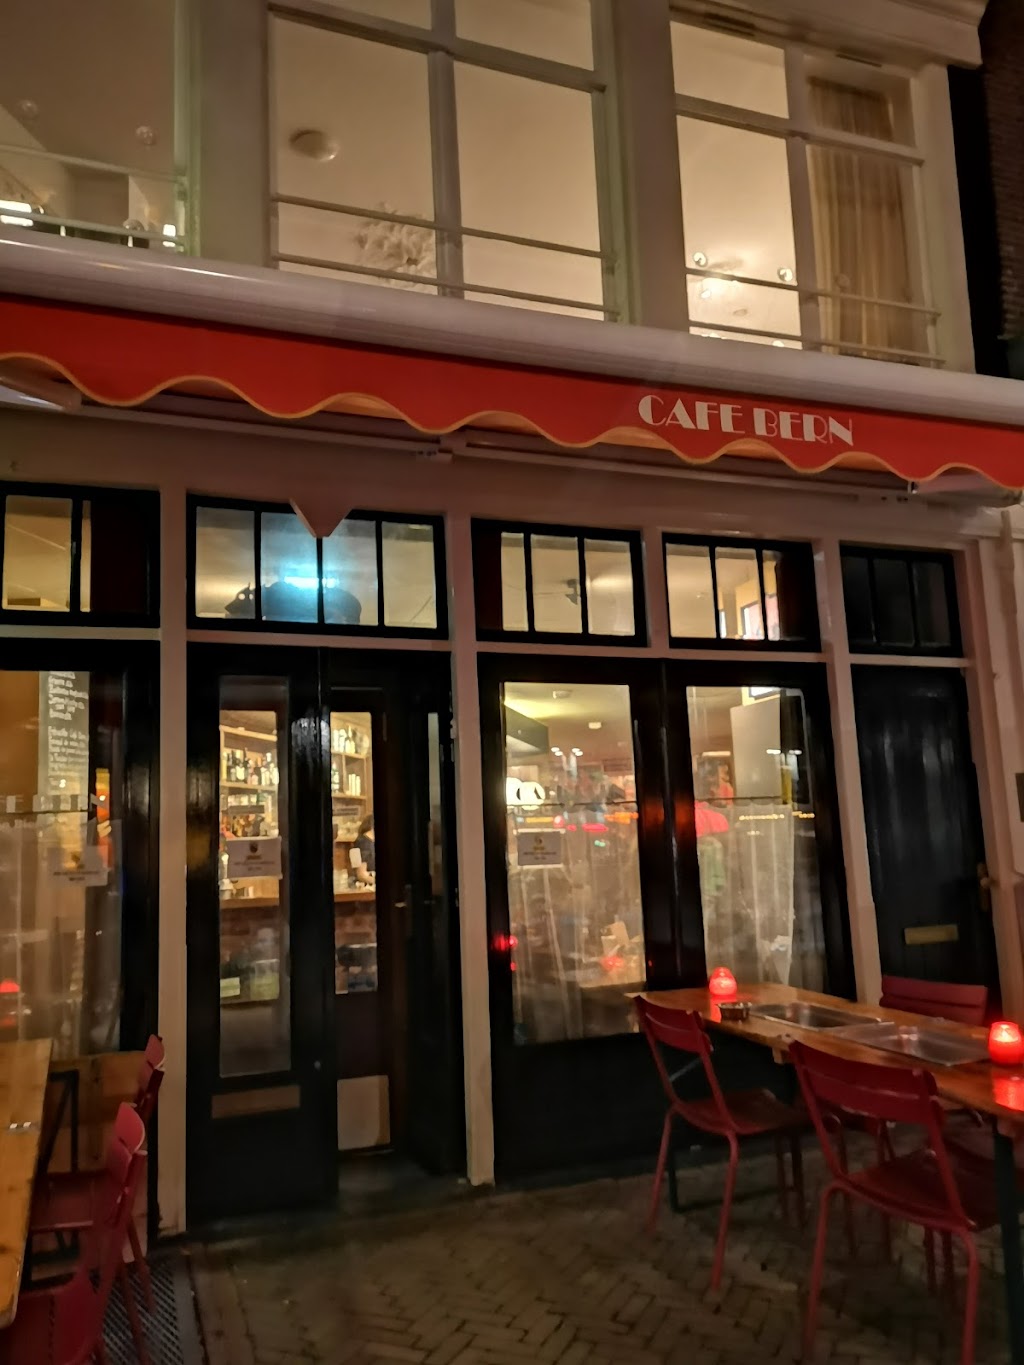 Café Bern | Nieuwmarkt 9, 1011 JR Amsterdam, Netherlands | Phone: 020 622 0034